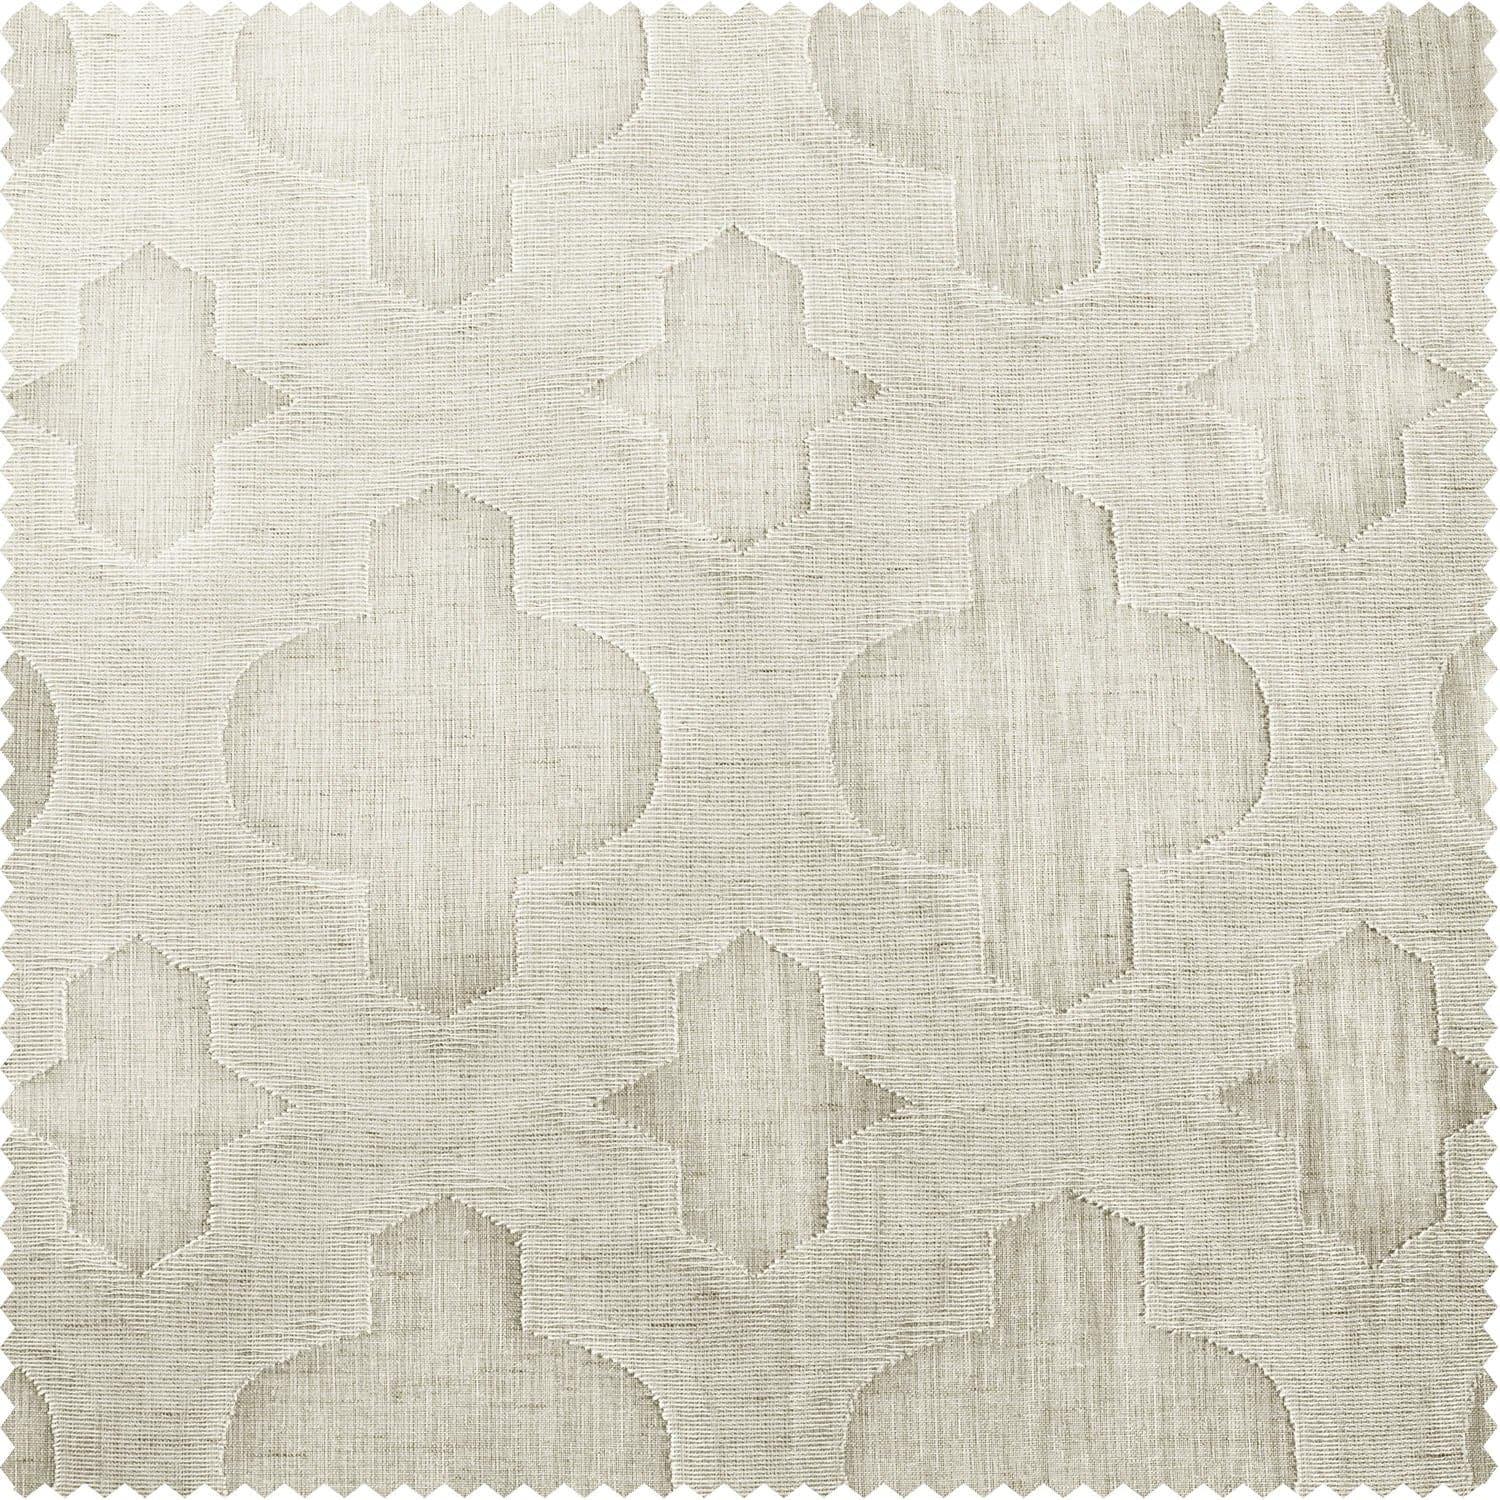 Calais Tile Cream Patterned Faux Linen Sheer Curtain